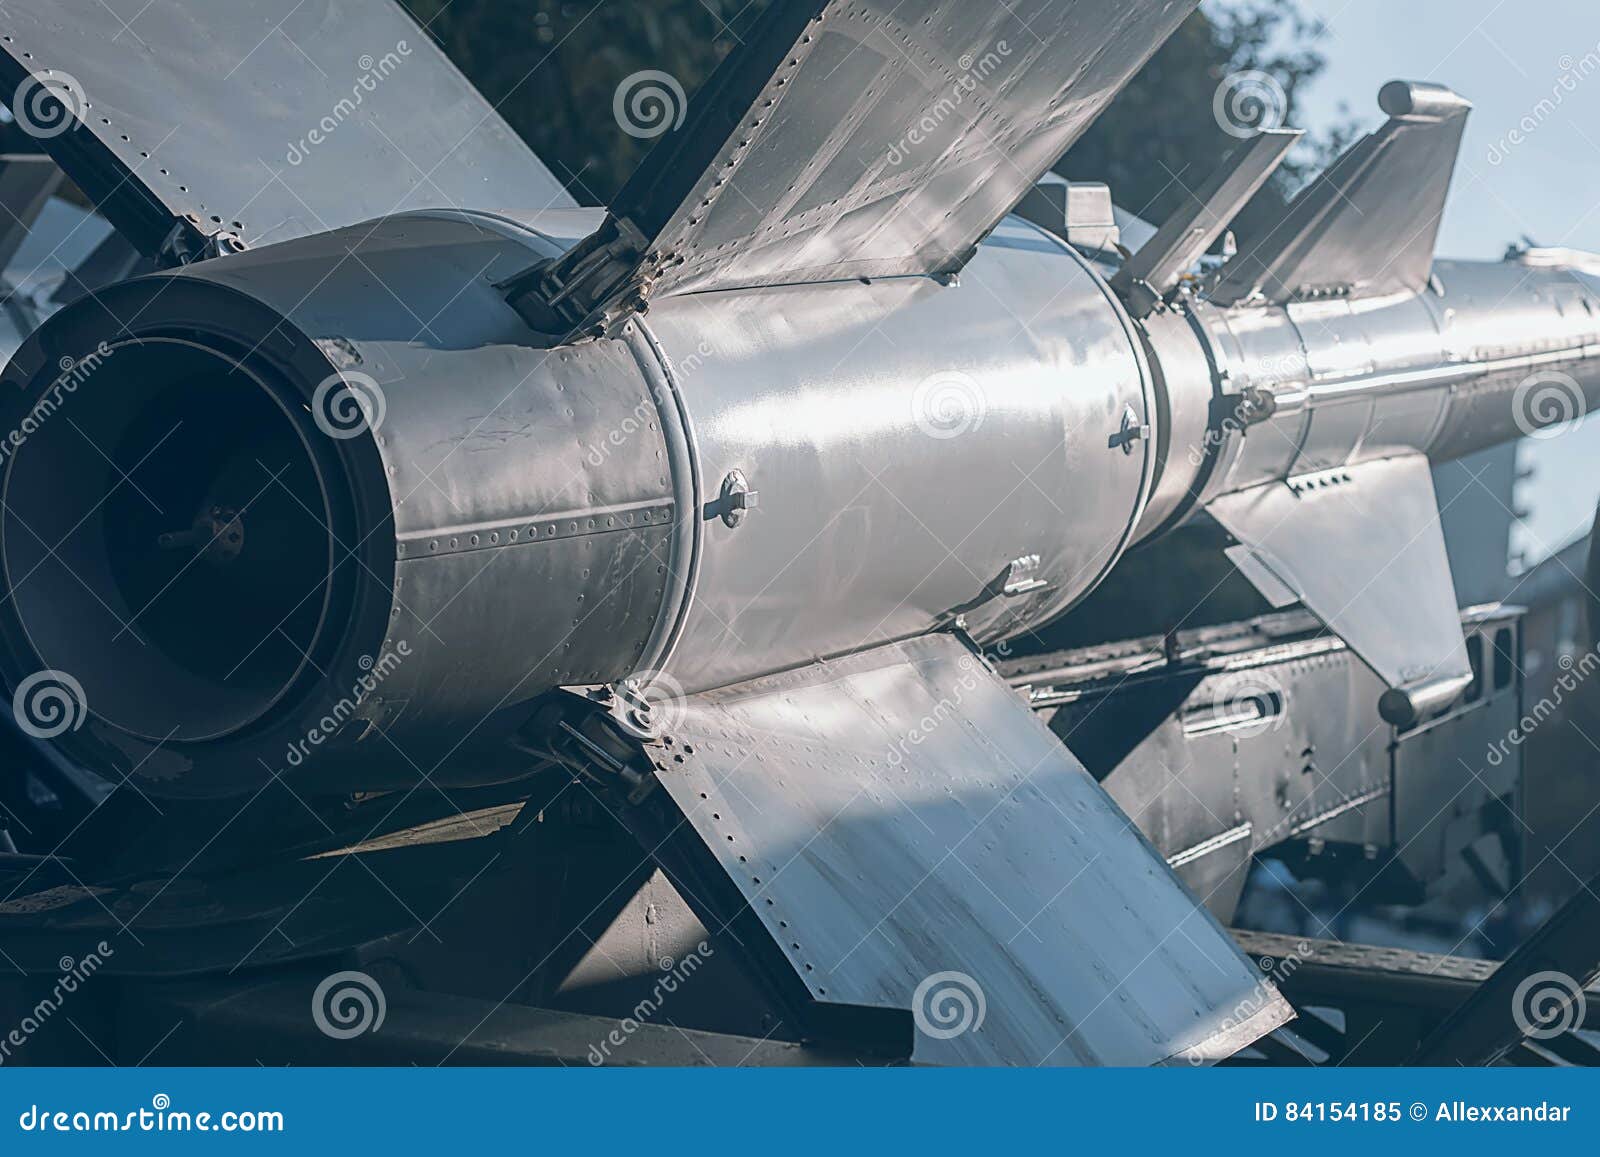 ballistic rocket. nuclear missile with warhead. war backgound.